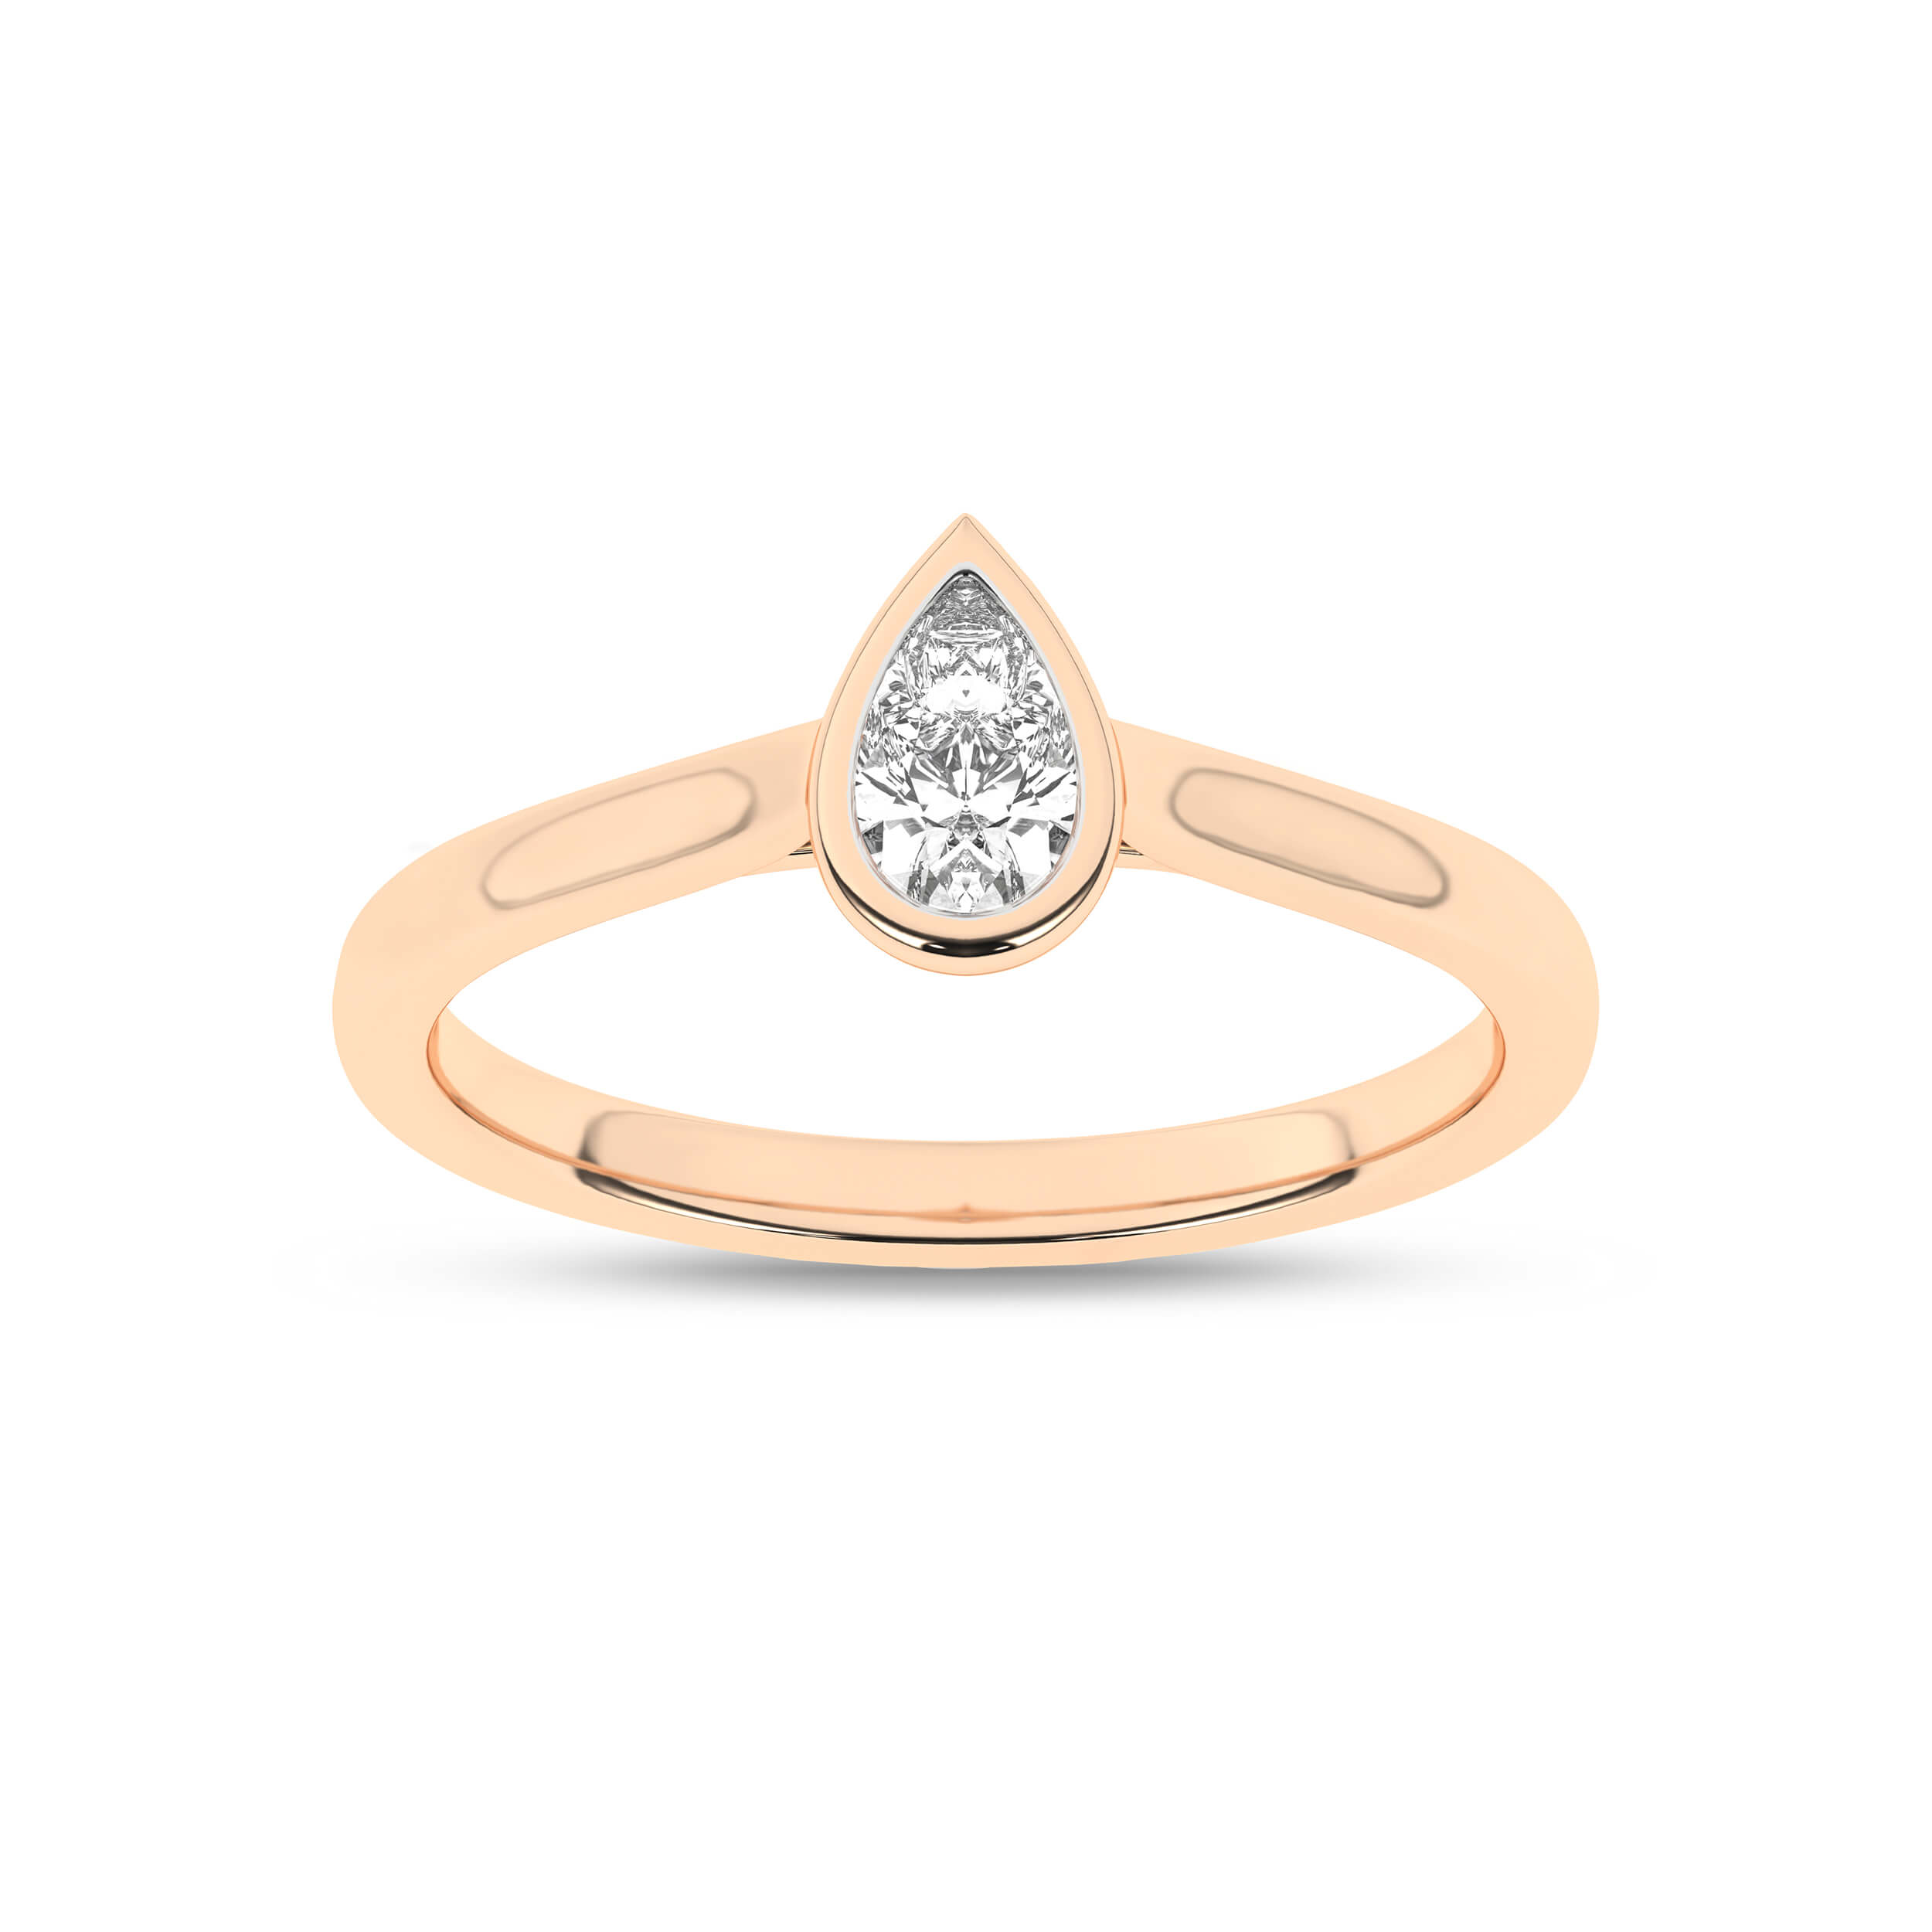 Inel de logodna din Aur Roz 14K cu Diamant 0.33Ct, articol RS0577, previzualizare foto 1